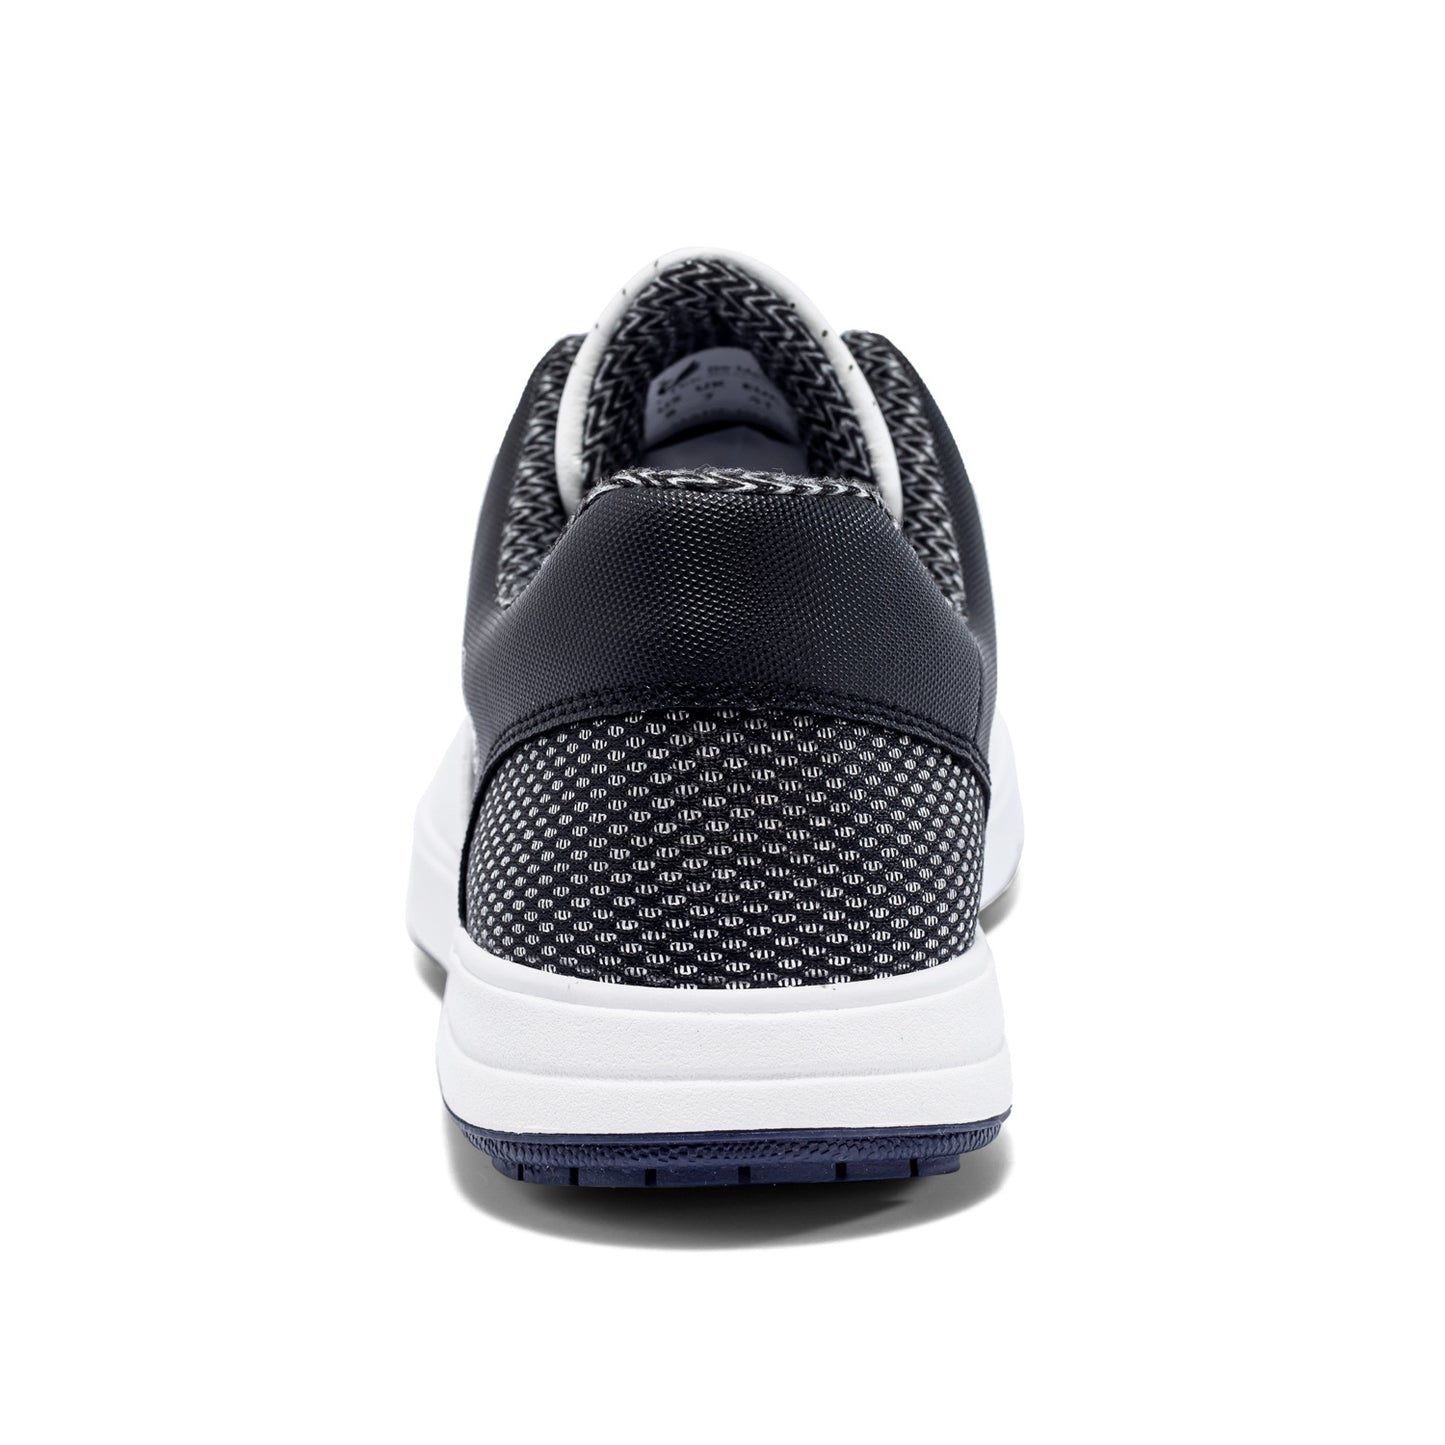 Waterproof Non-slip Breathable Wholesale Outdoor Sneakers